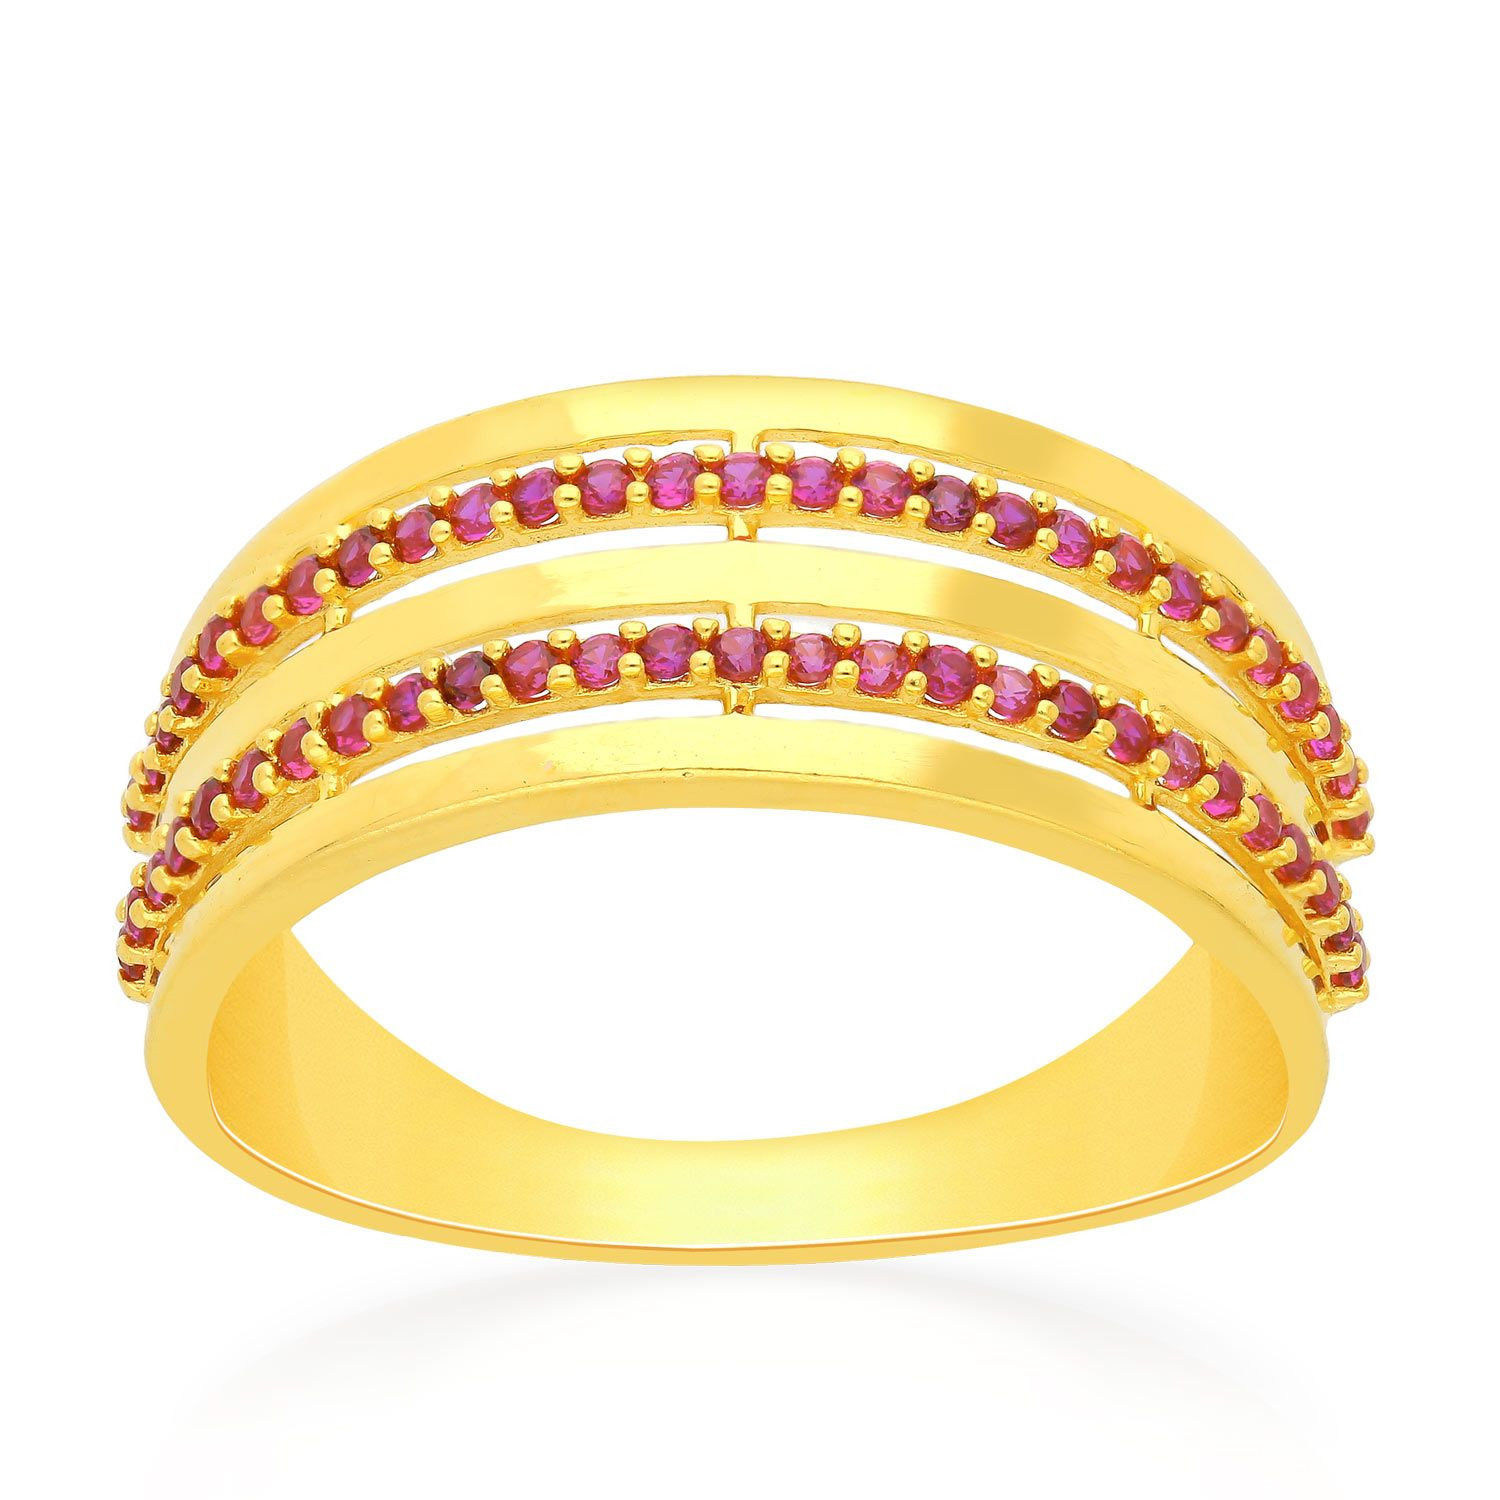 Wedding Wear Plain Yellow Gold Finger Rings at Rs 5000 in Mumbai | ID:  19244567855